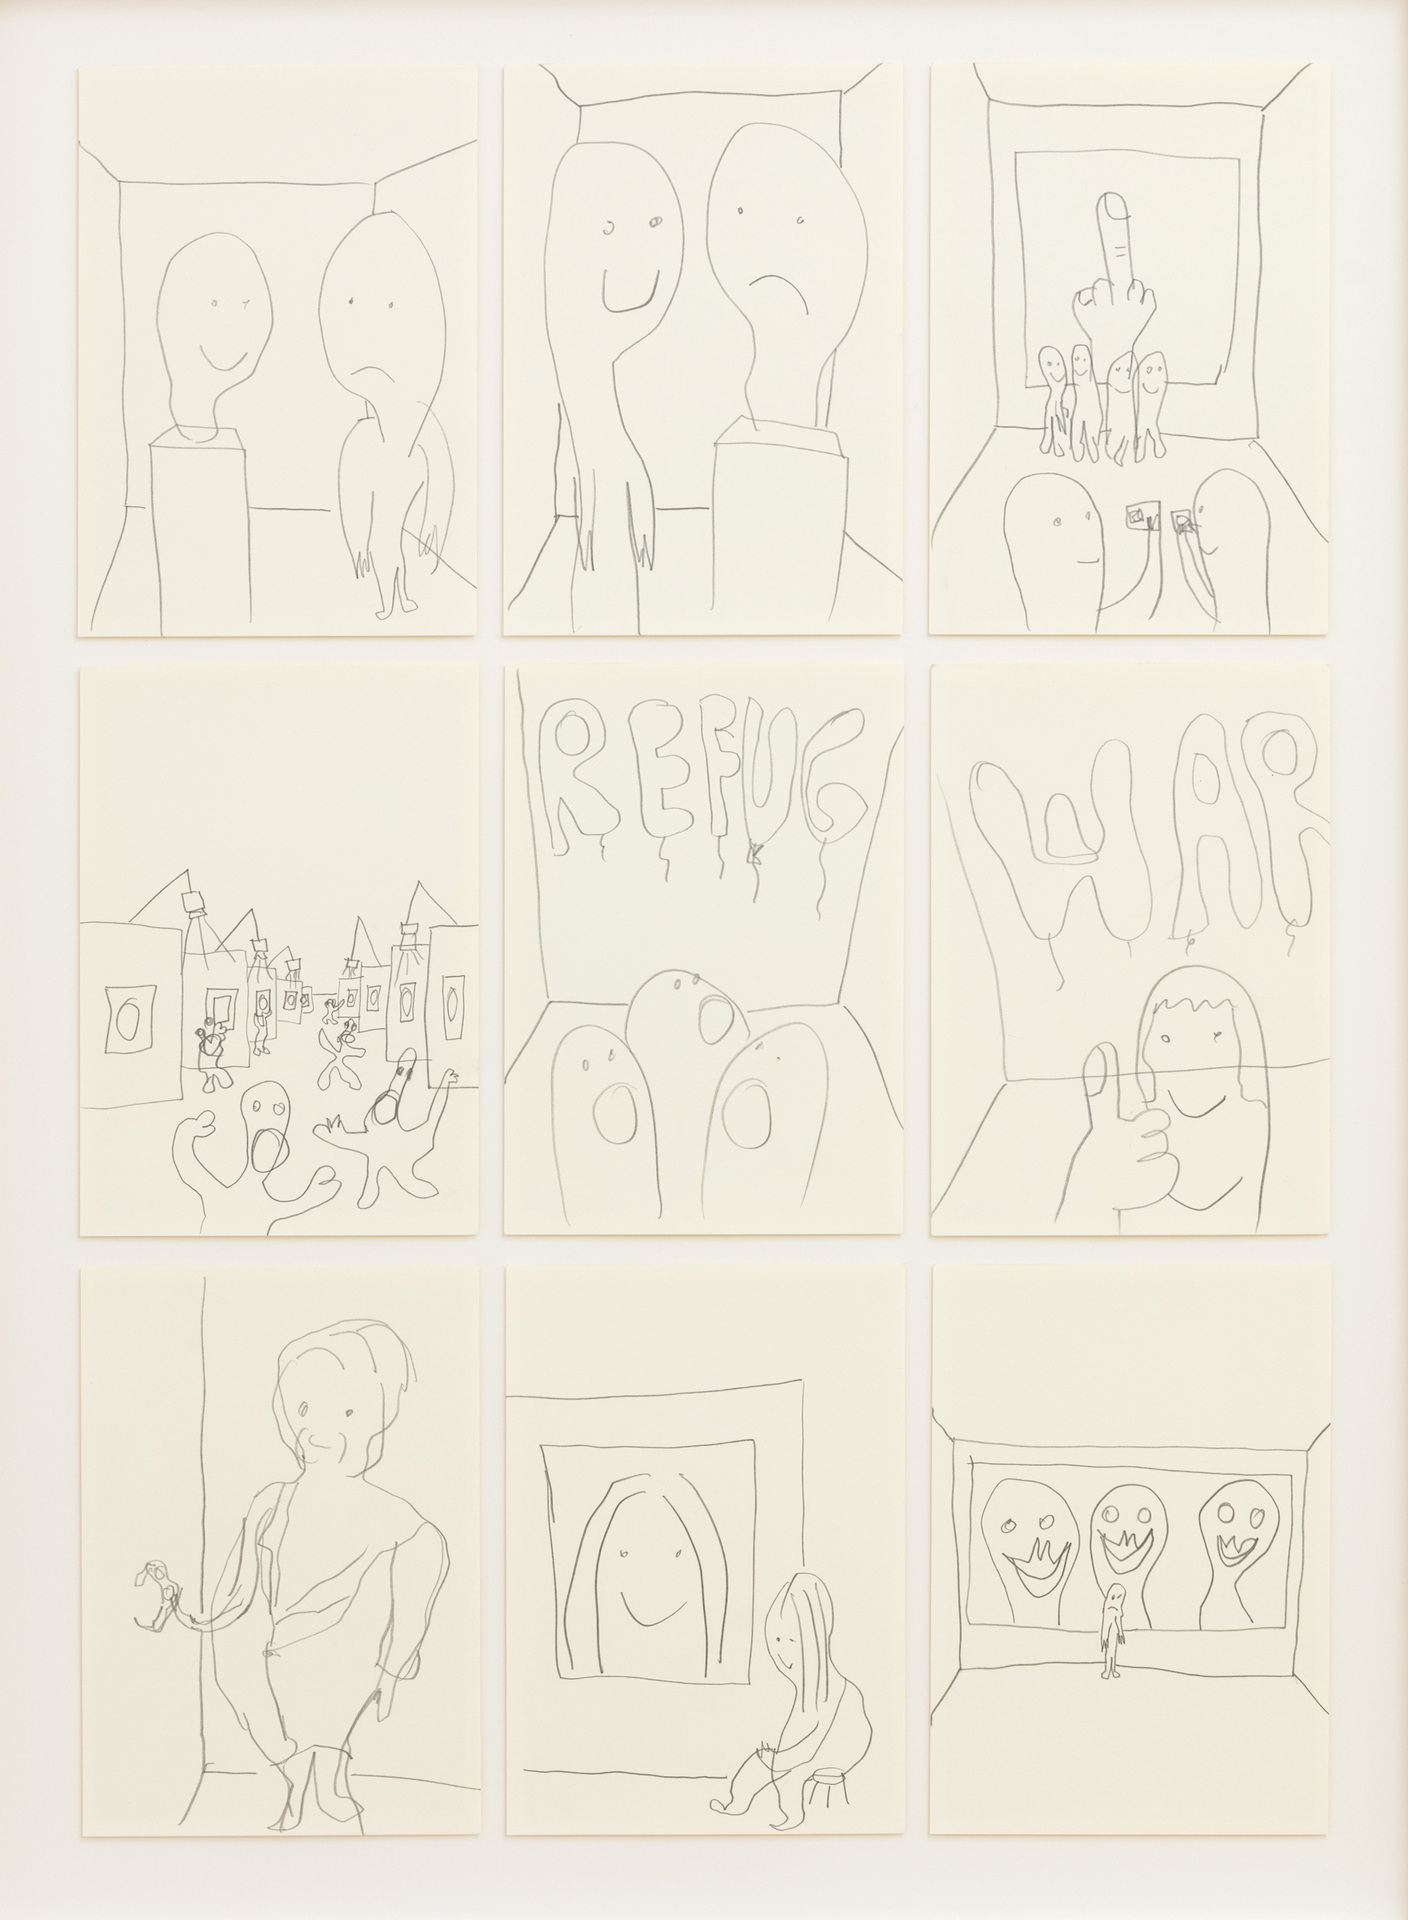 Sebastian Jung, Kunstmesse, 2018, pencil on paper, 5 frames, each 54,5 x 74 cm